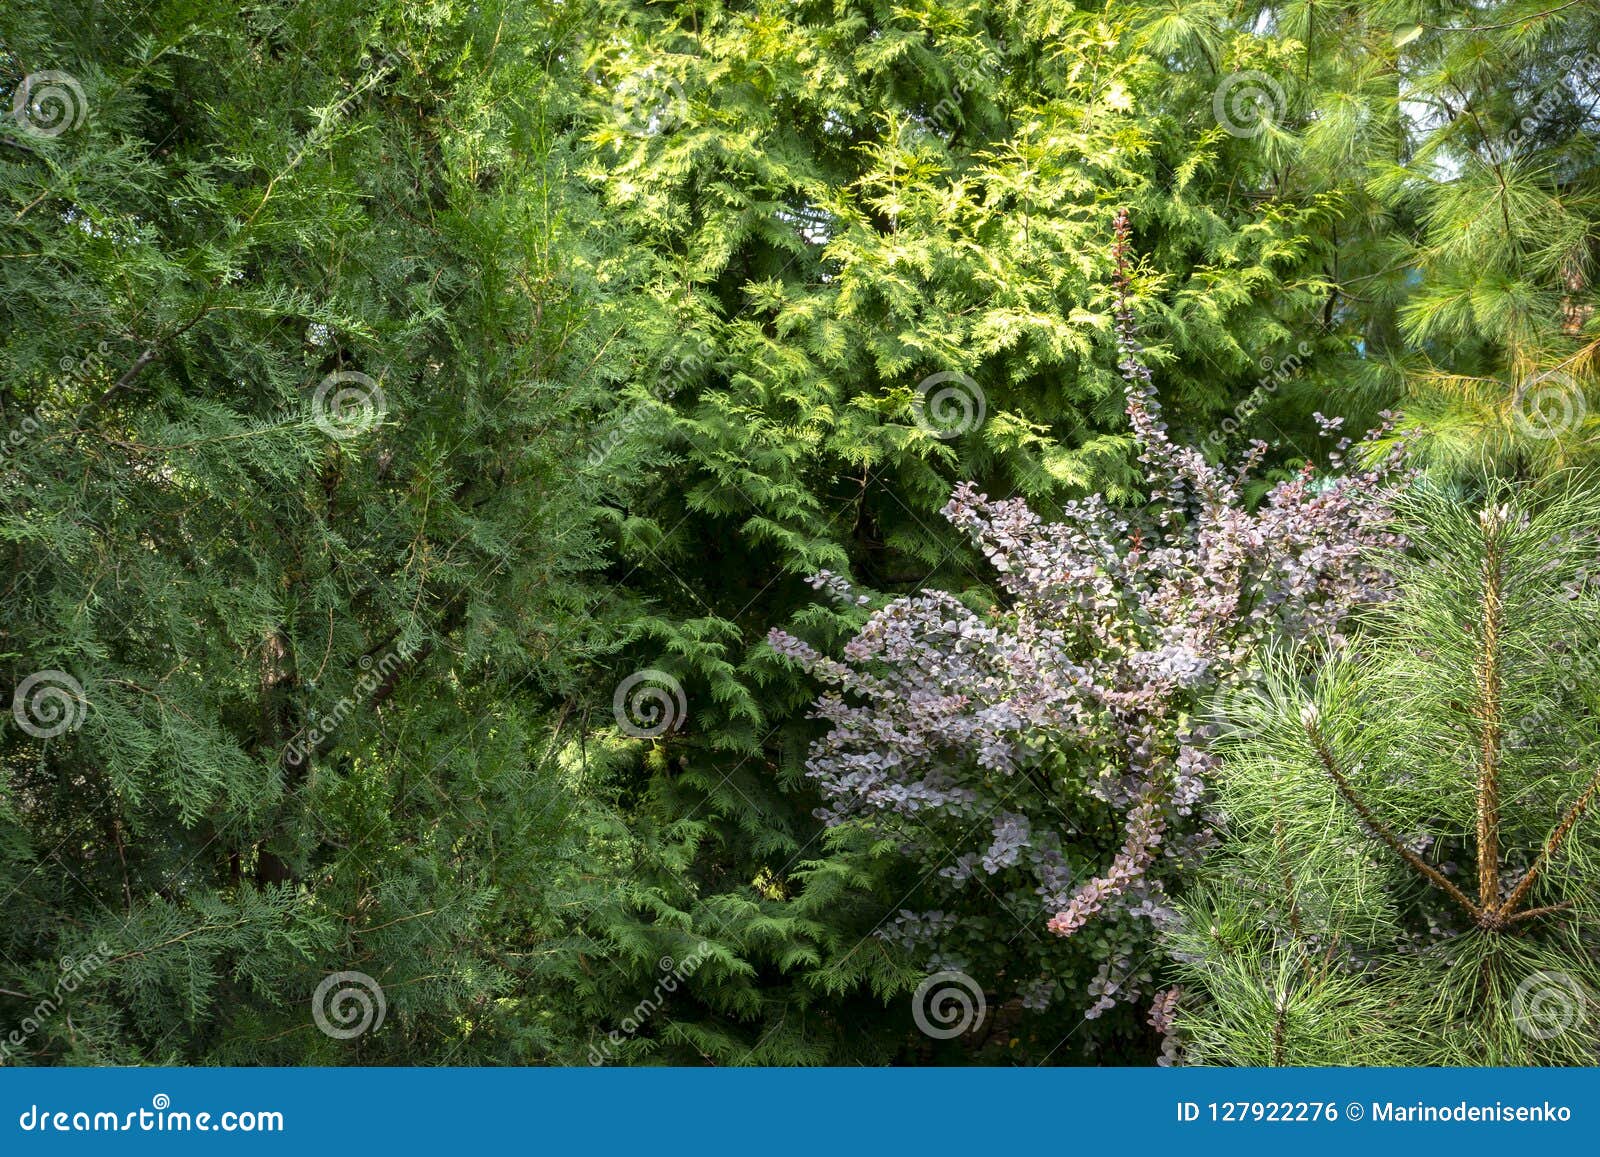 original green background of a natural mixed texture of evergreens: thuja occidentalis columna, aurea, purple barberry berberis th